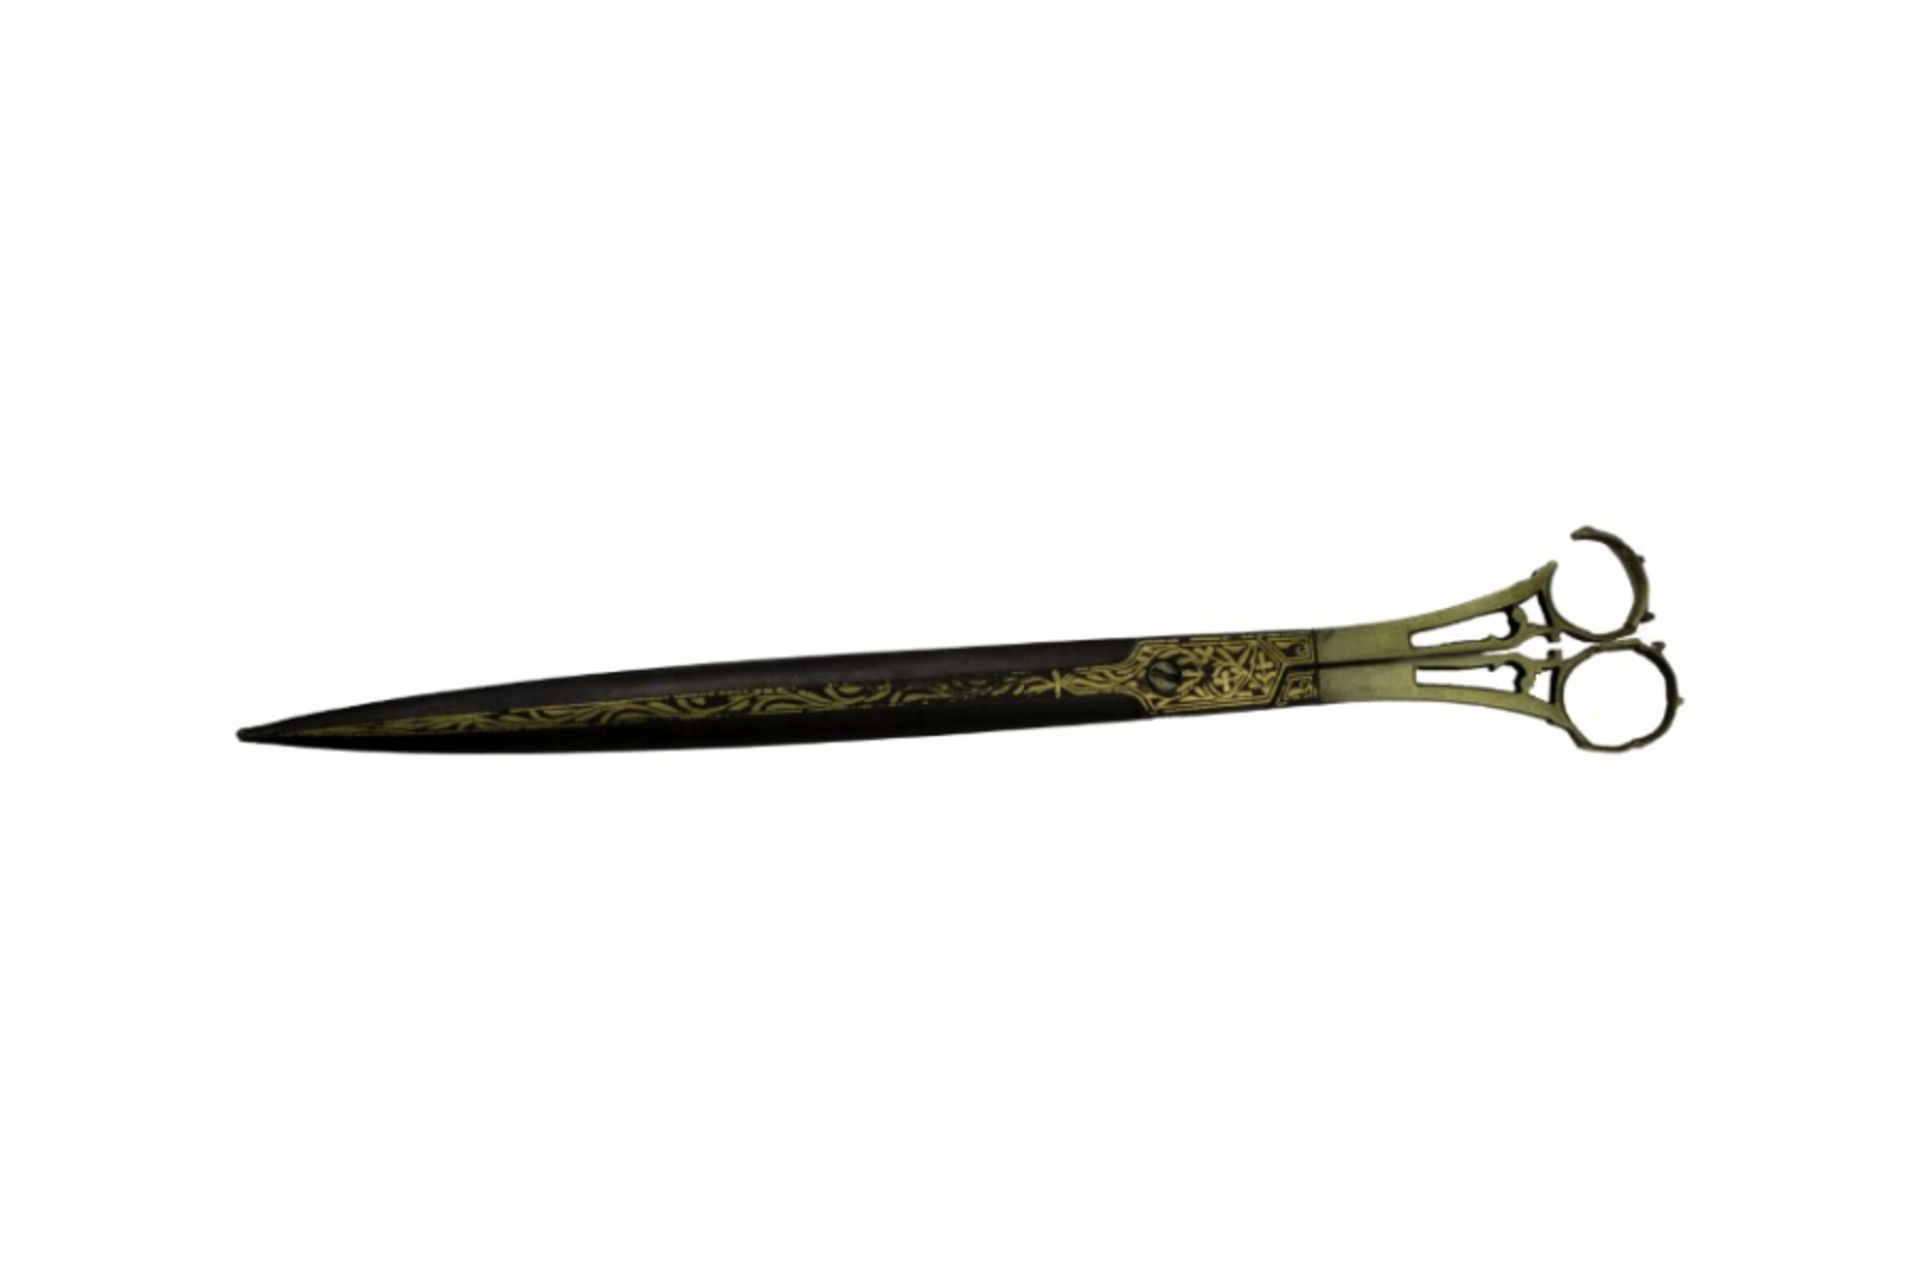 A 19th century Ottoman pair scissors - Image 2 of 2